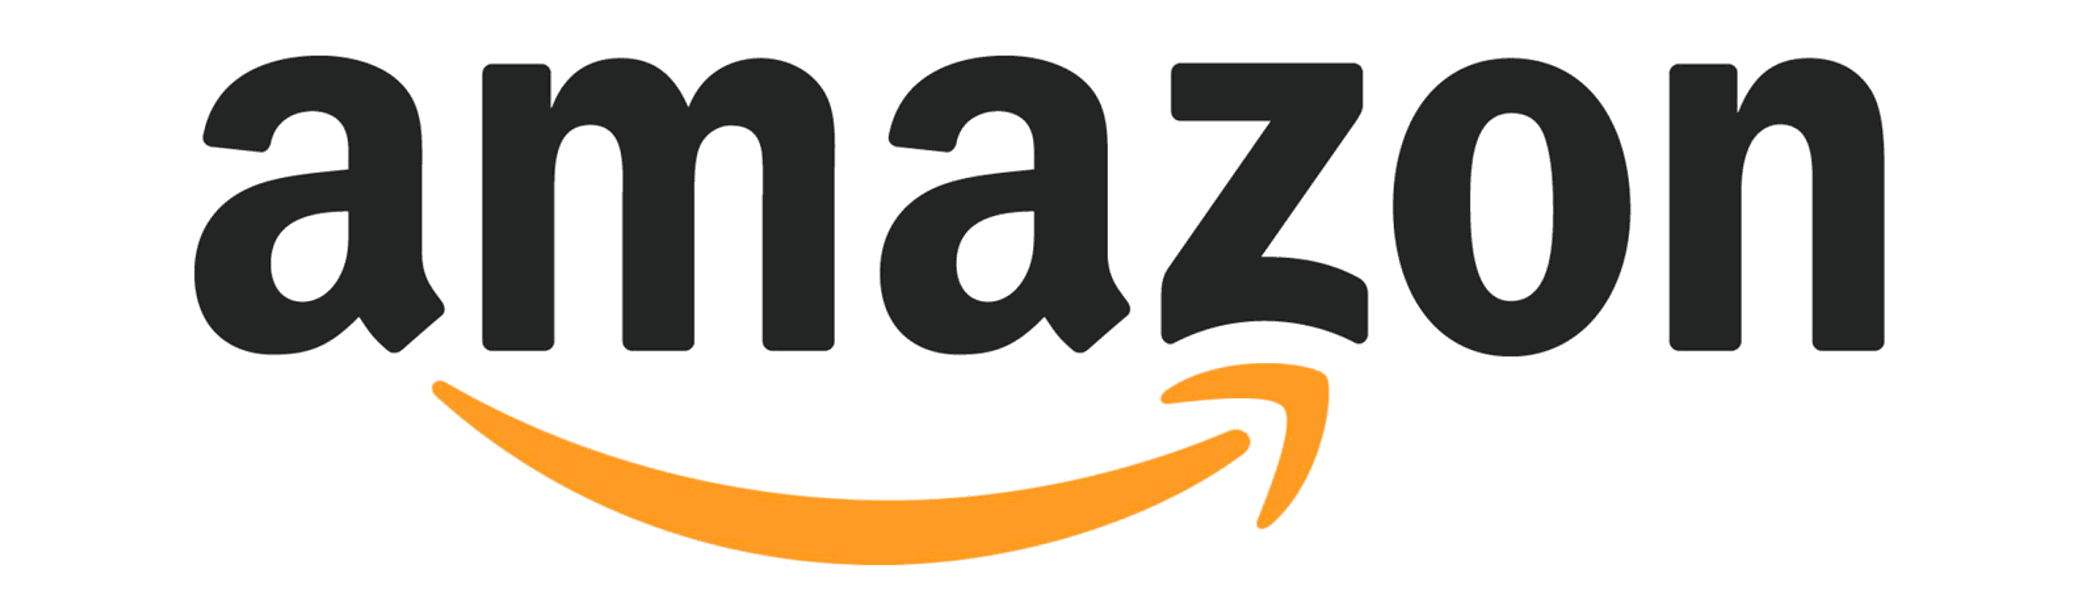 Where to Buy Chloe Rachel Gallaway Books - Amazon